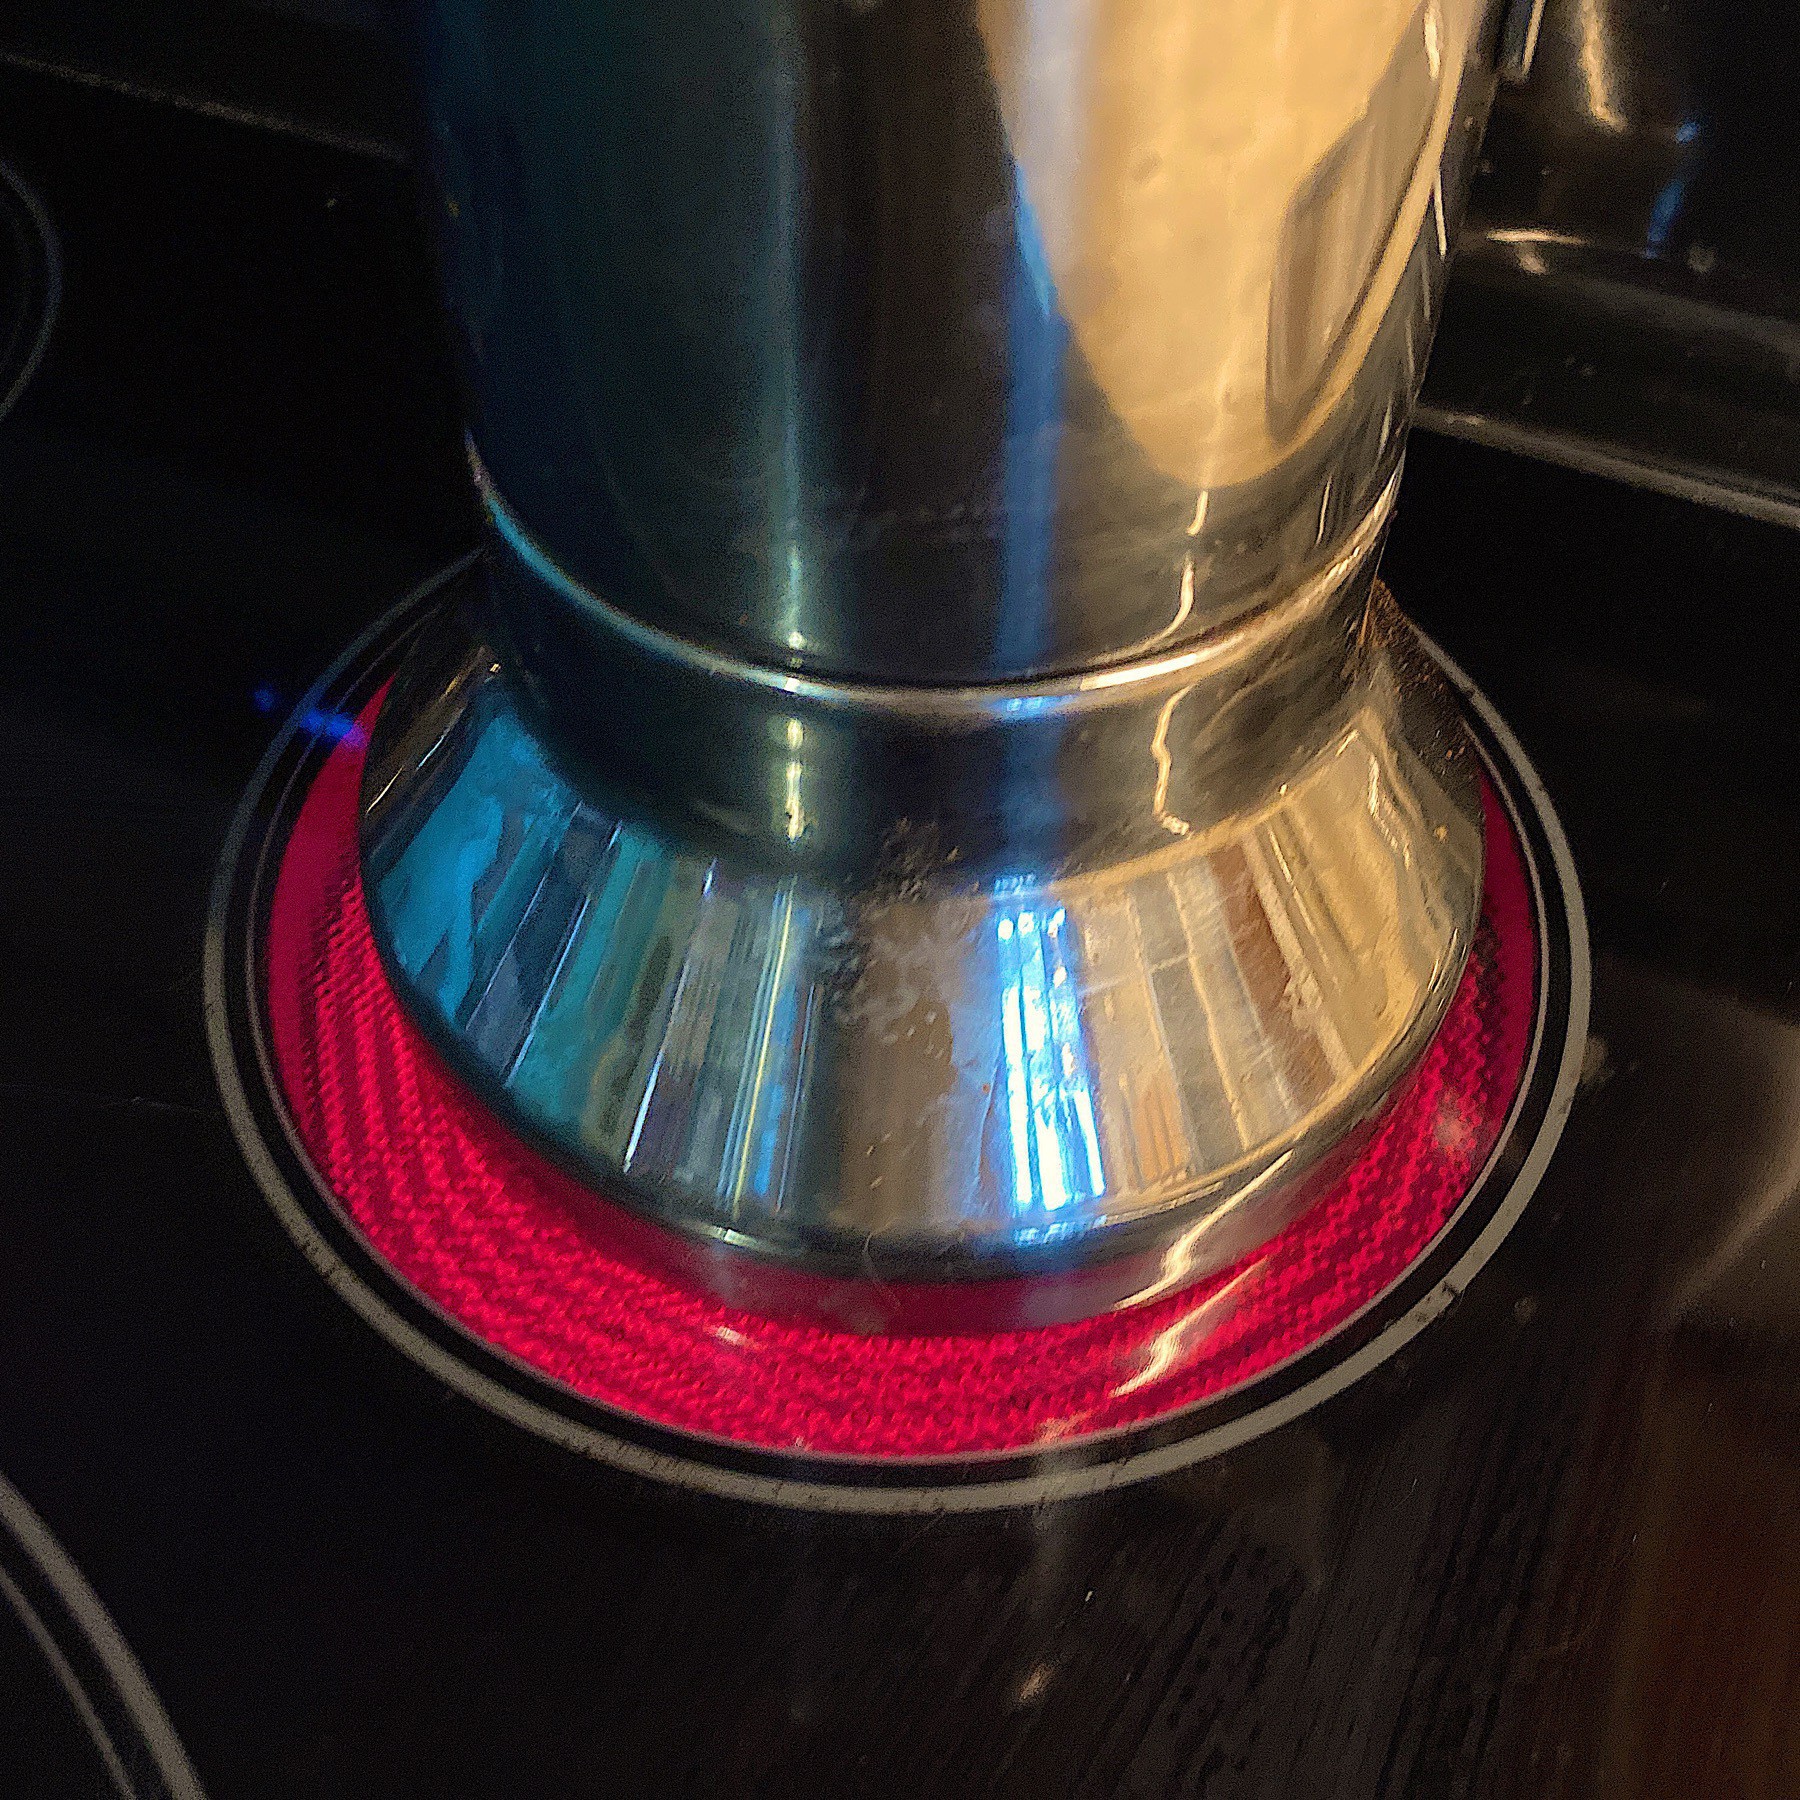 Bottom of metal coffee maker on glass stovetop.